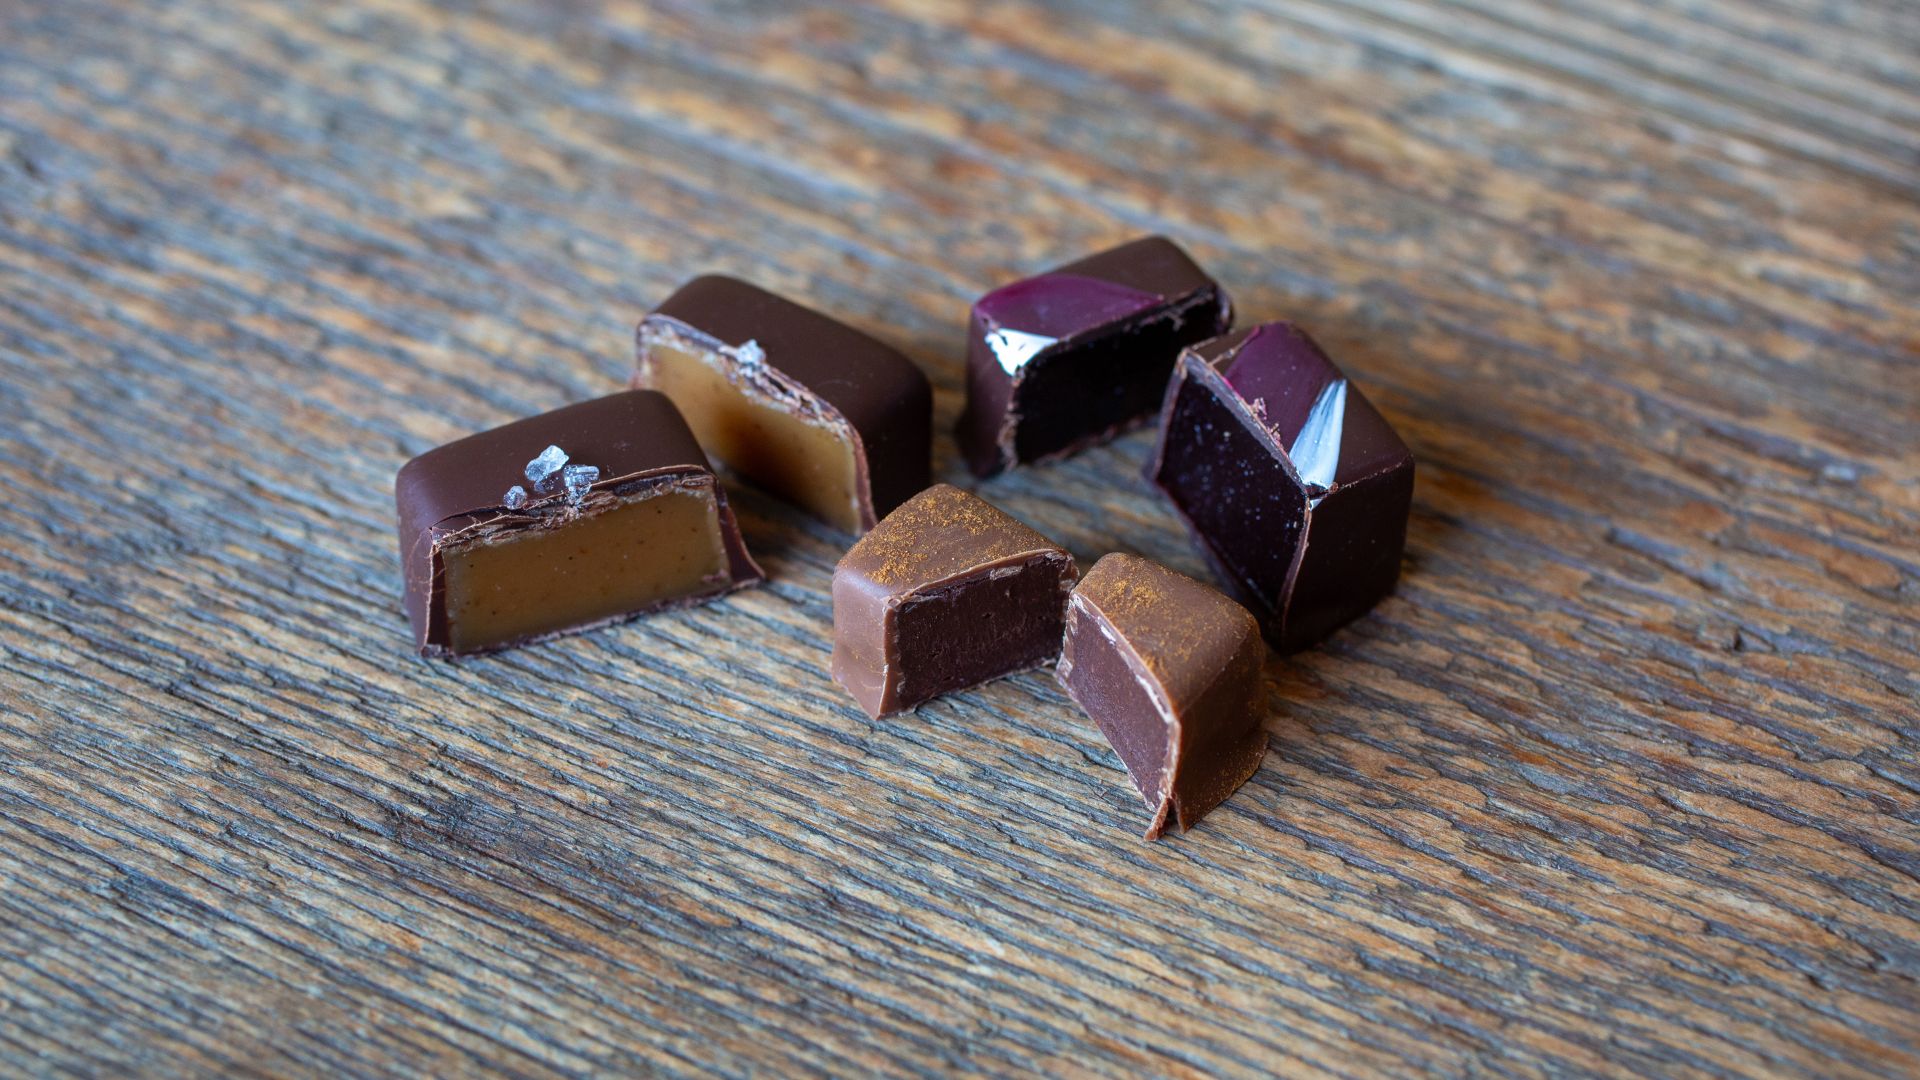 Peek inside the chocolate truffles from Kakao Chocolate in St. Louis.